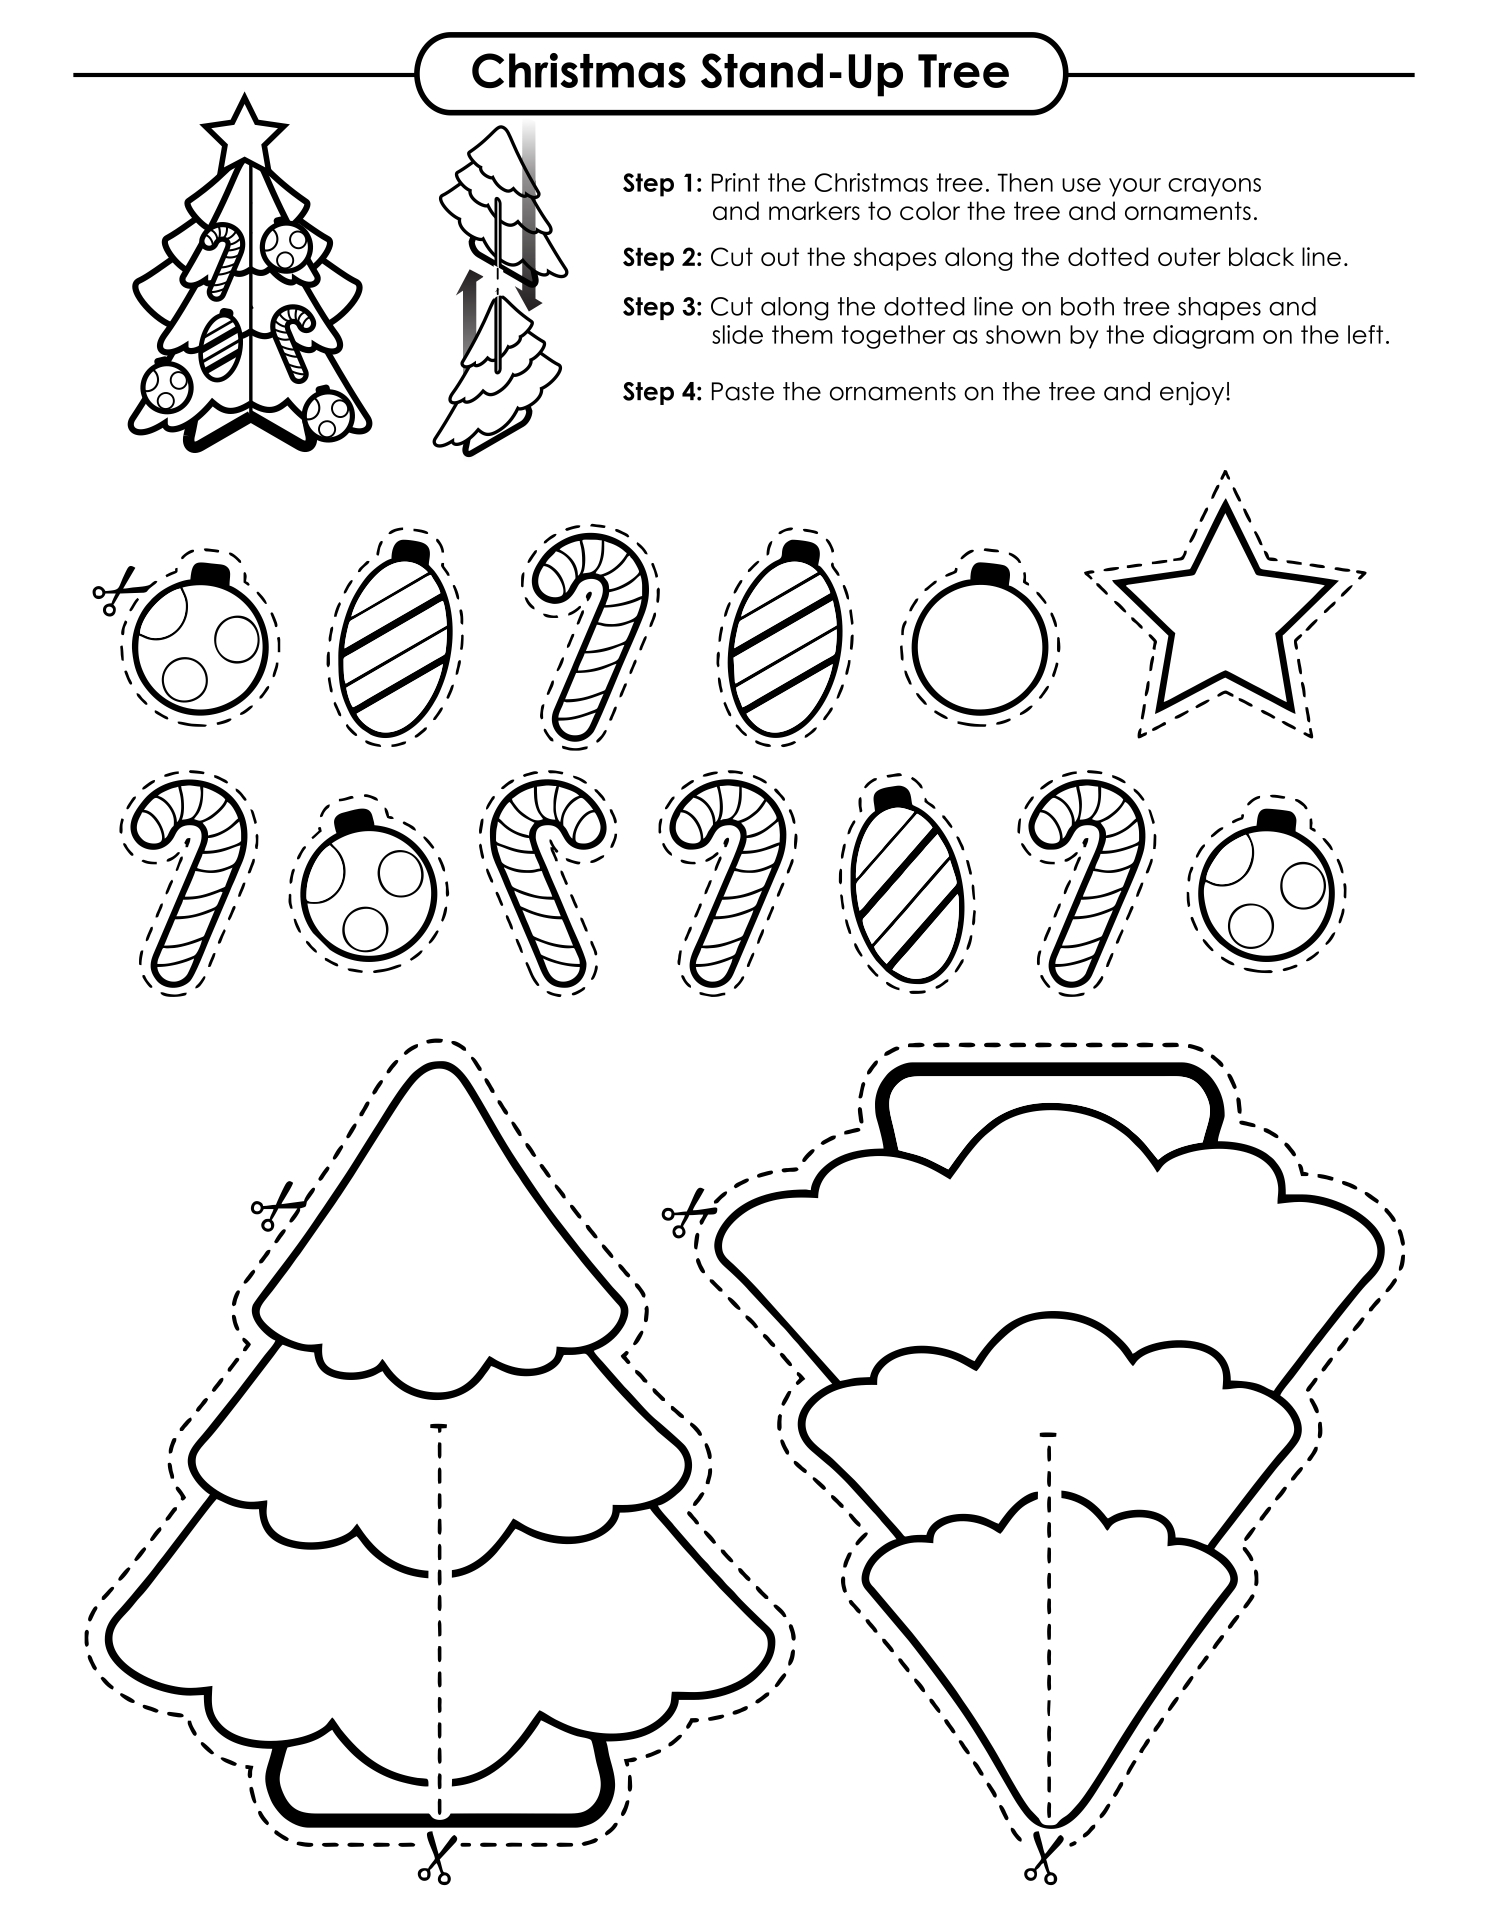 Free Printable Christmas Craft Patterns_51932